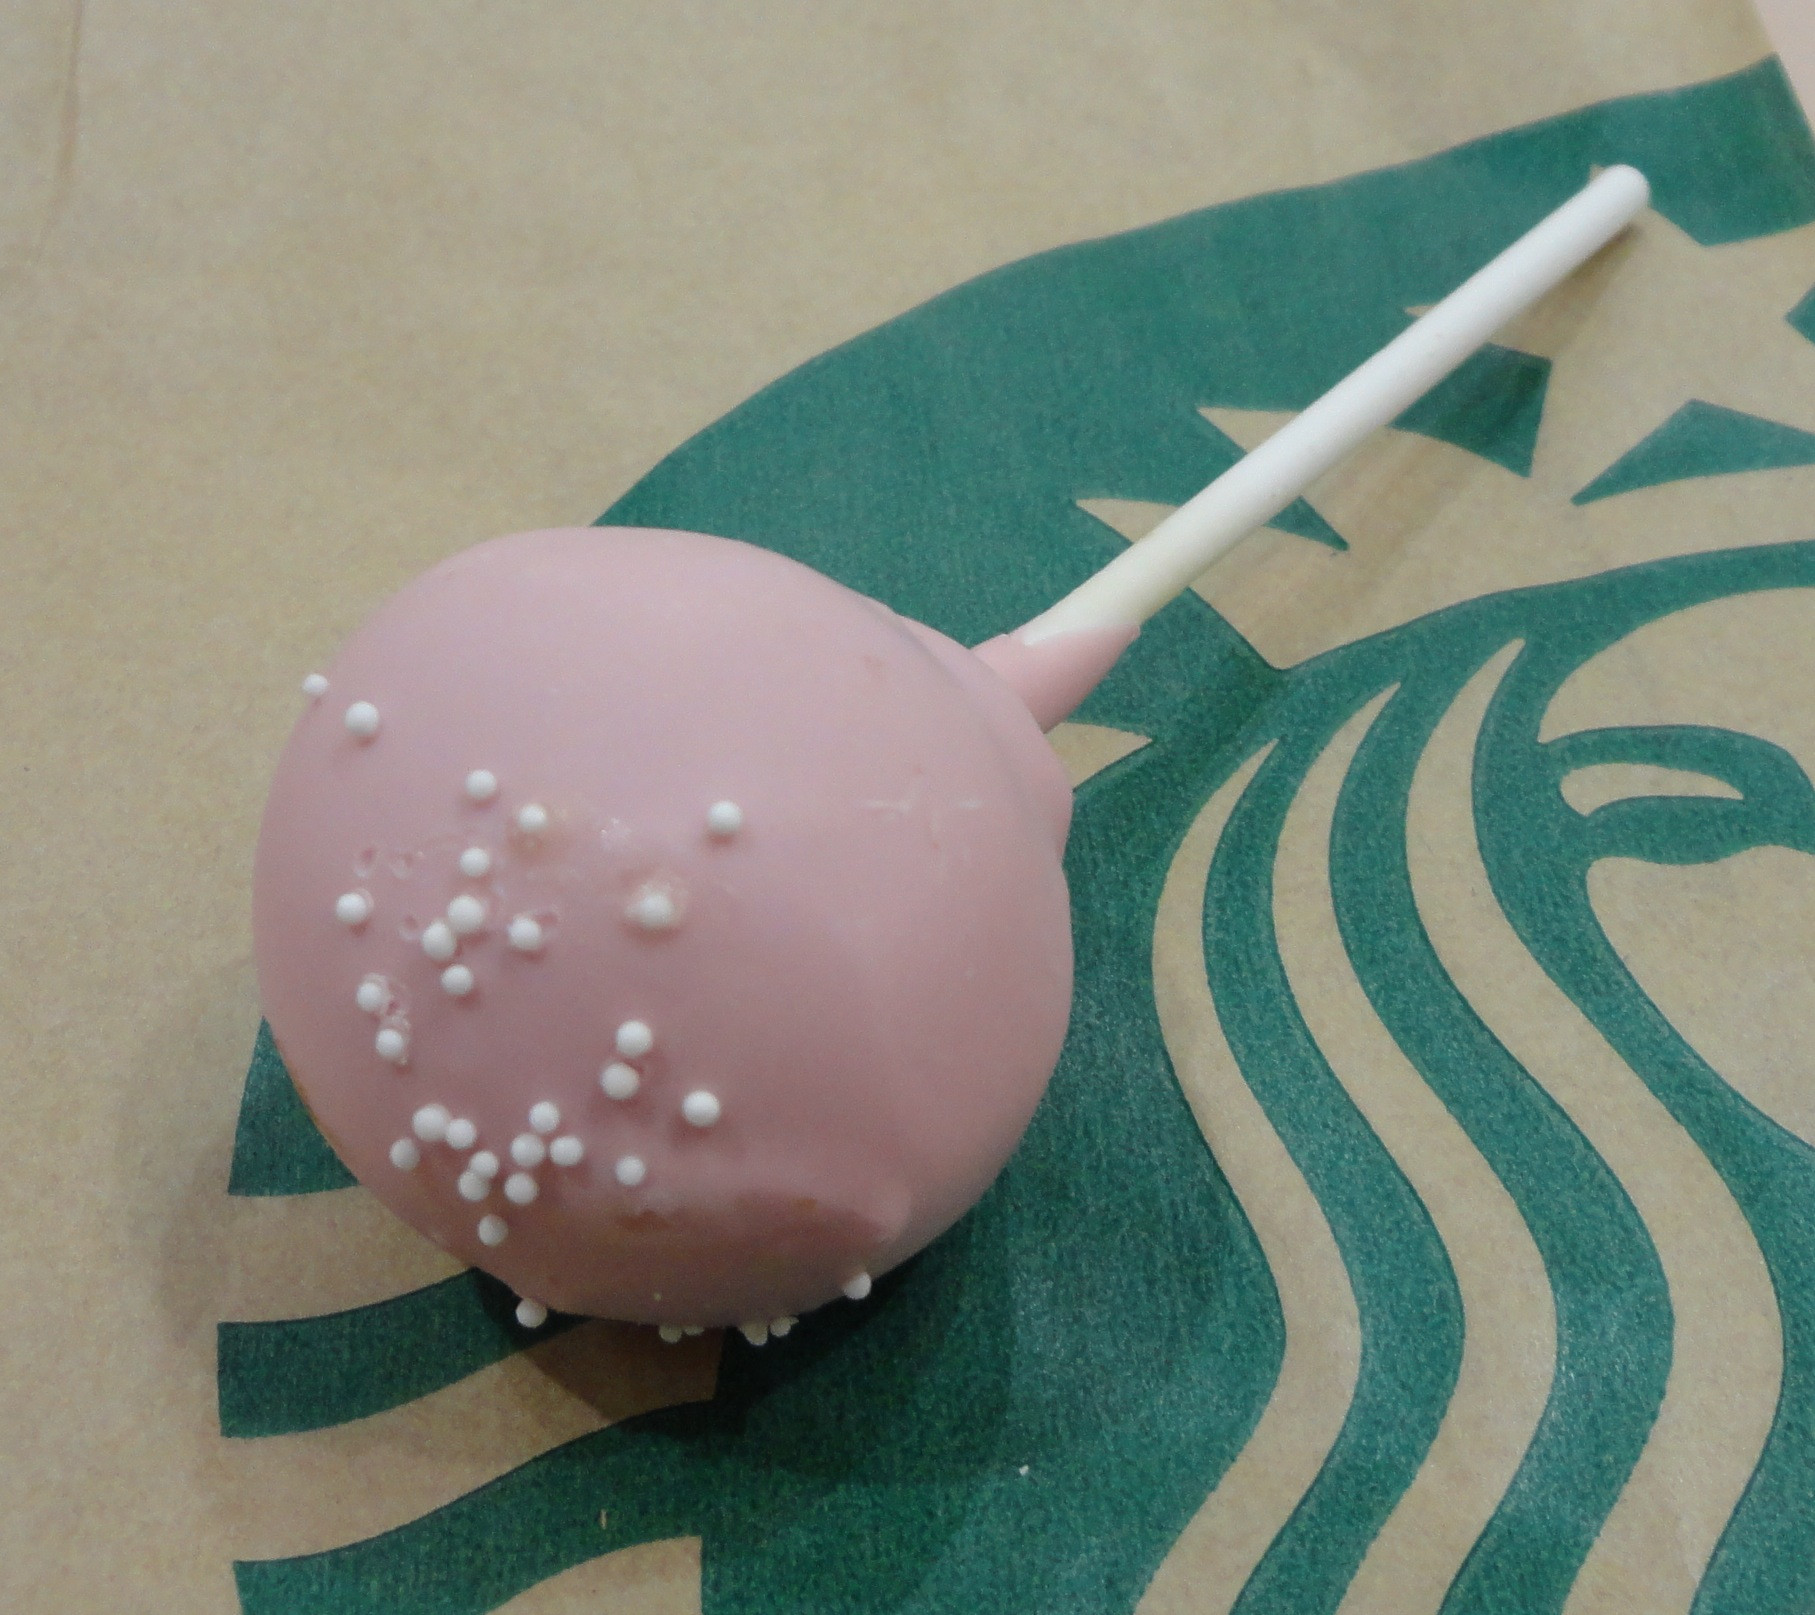 Best ideas about Starbucks Birthday Cake Pop Recipe
. Save or Pin Cake Pop Now.